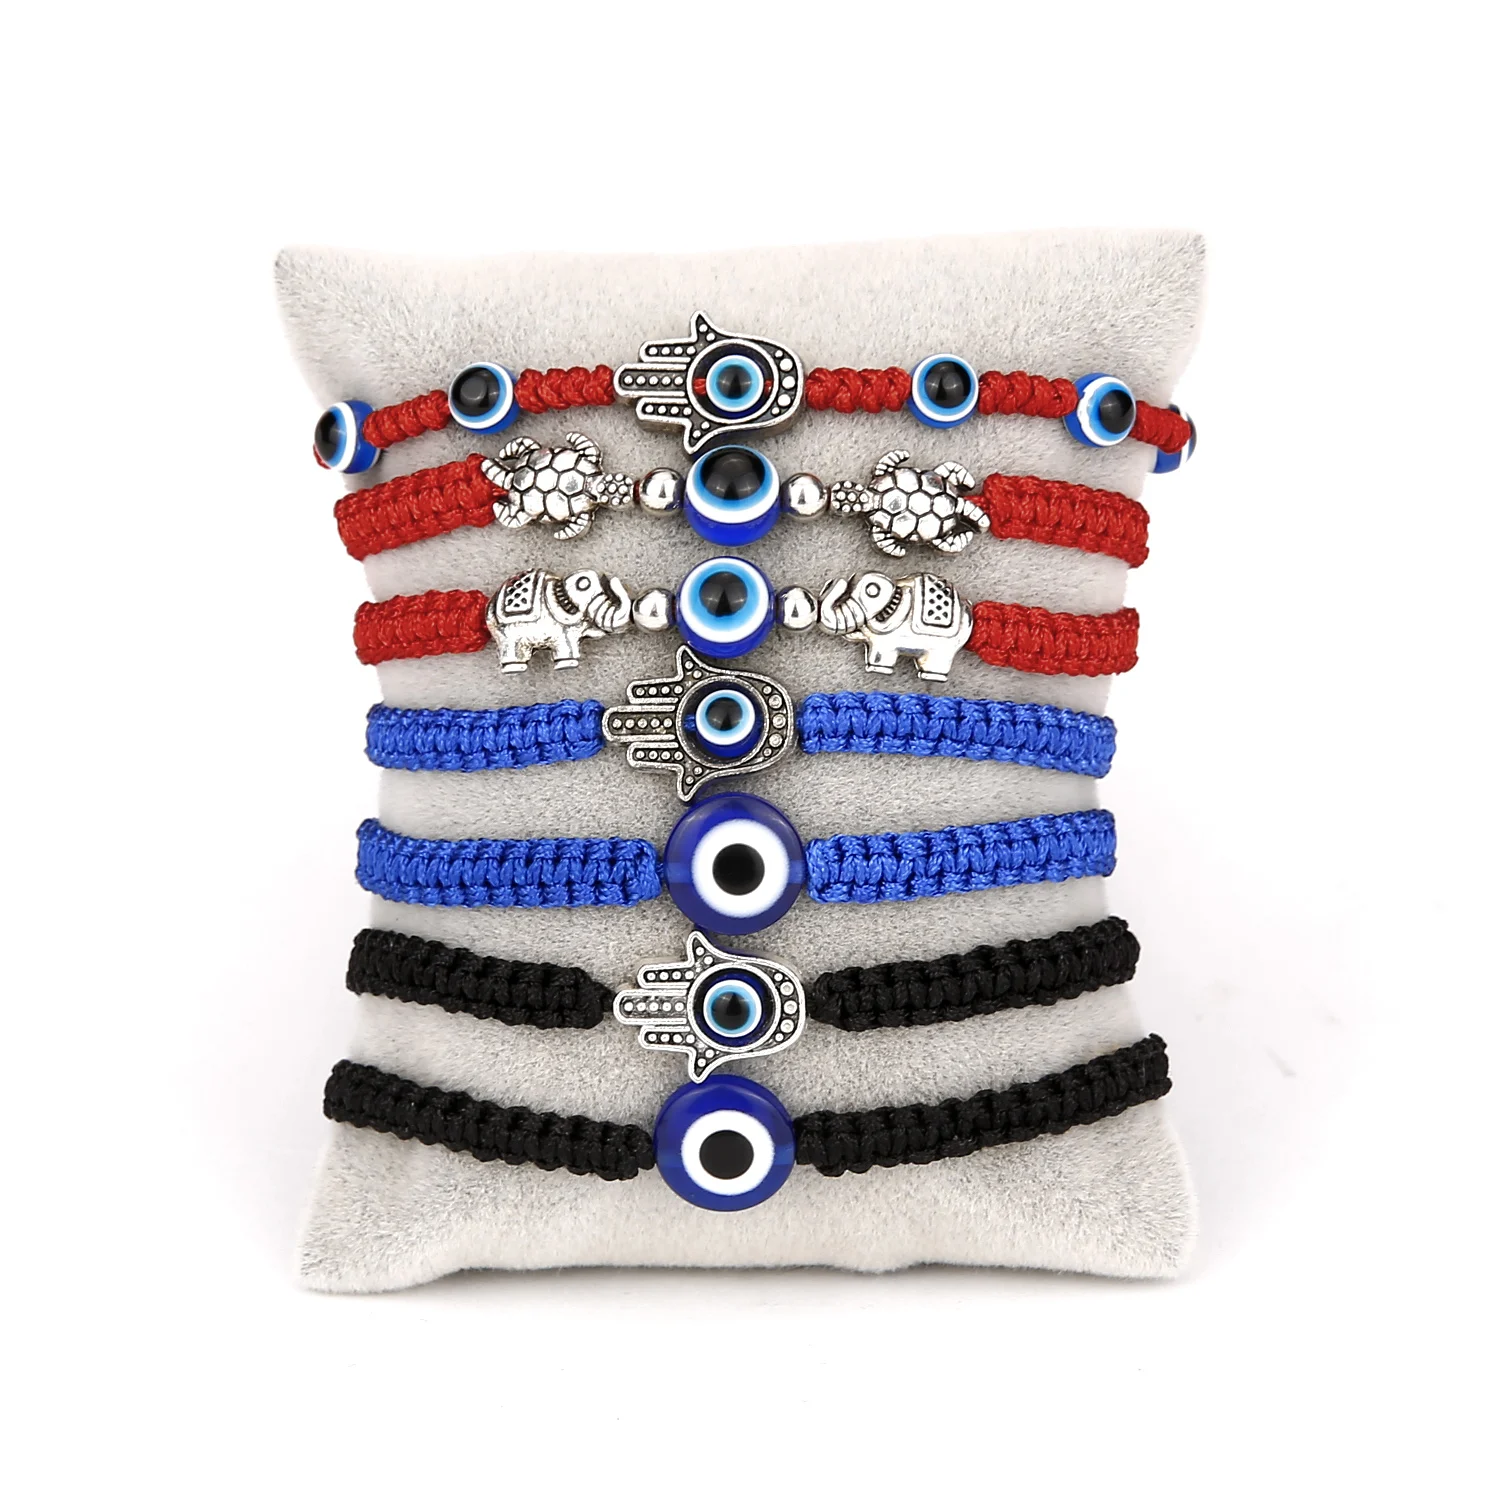 Turecký modrá zlo oko náramek muži ženy ruční tkanina červená nitka nastavitelný opletené náramek šťastný modlitba pulsera šperků dar